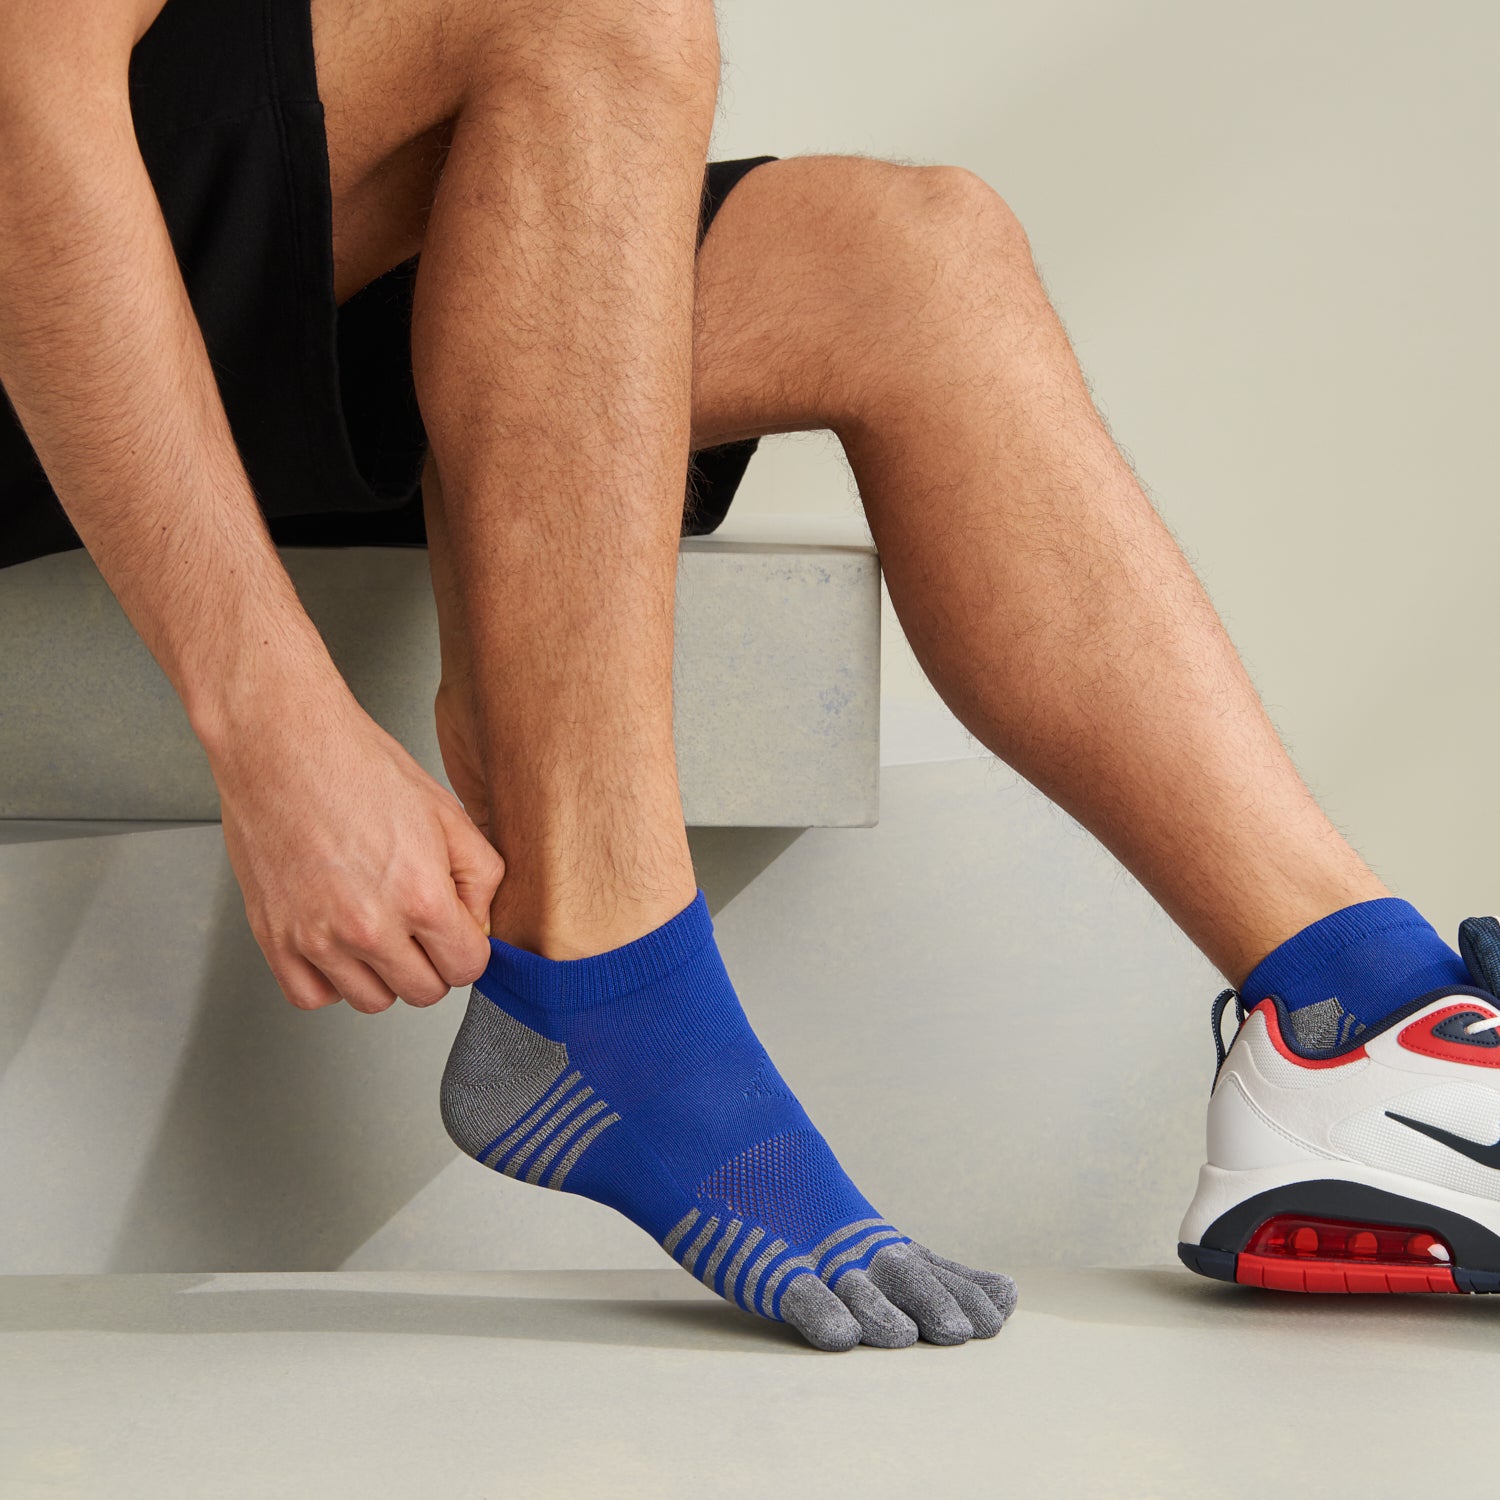 Veidoorn Professional Sport Socks Men Anti Slip Strips Ankle